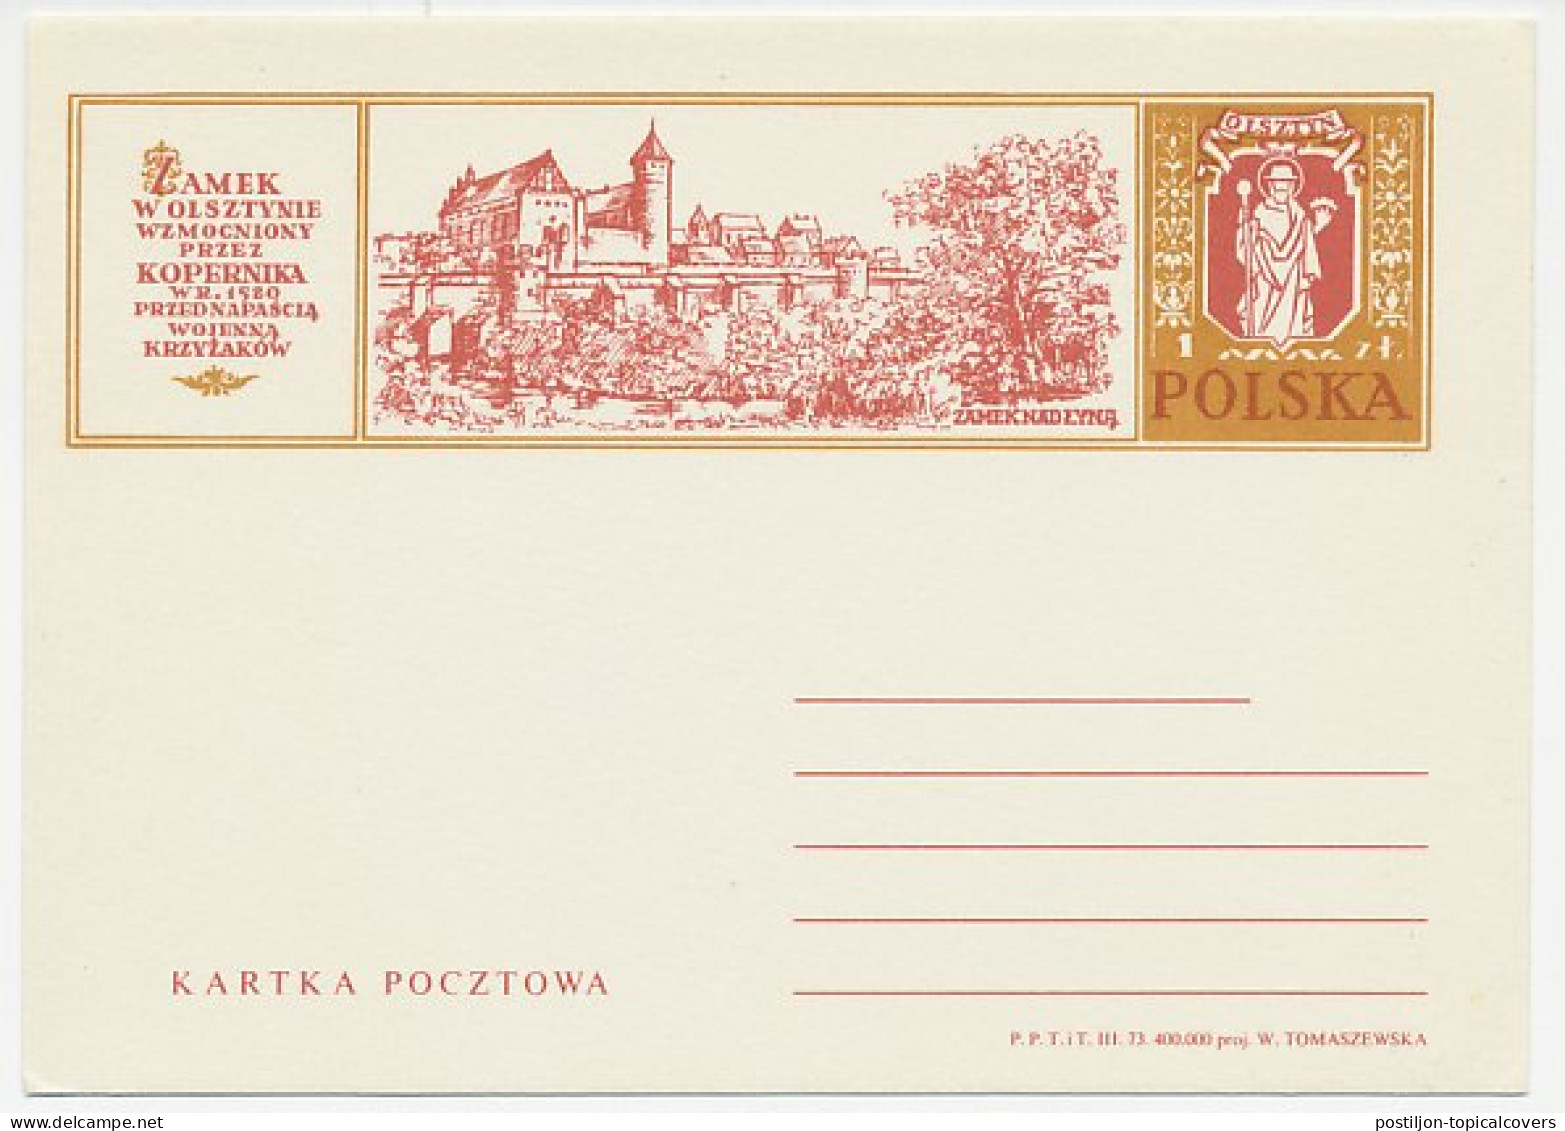 Postal Stationery Poland 1973 Nicolaus Copernicus - Astronomer - Astronomy